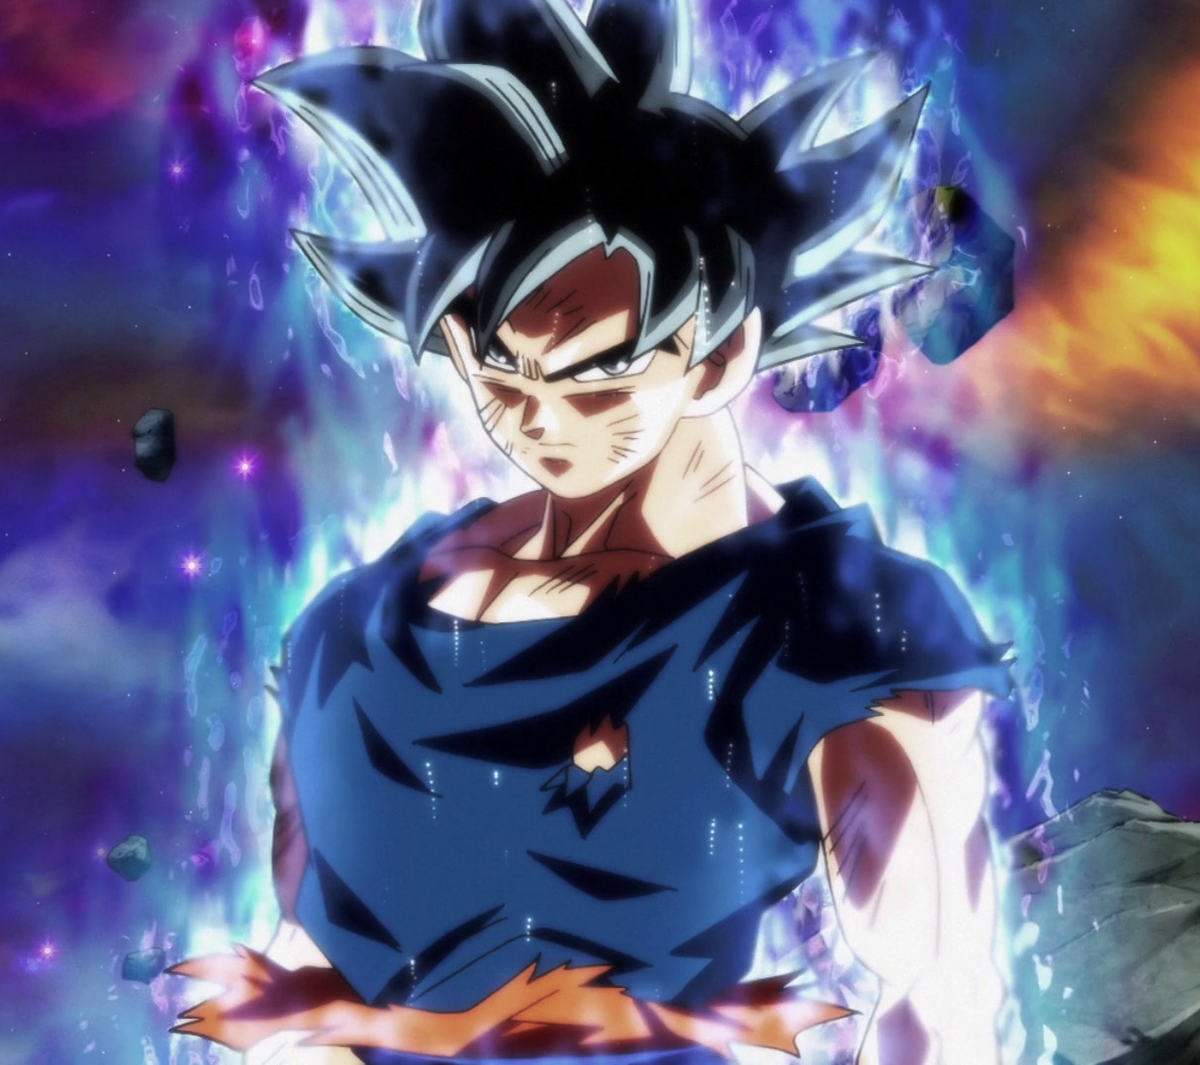 Ultra Instinct Goku Vs Black Frieza Fan Animation Teaser Goes Viral! - Anime  Explained